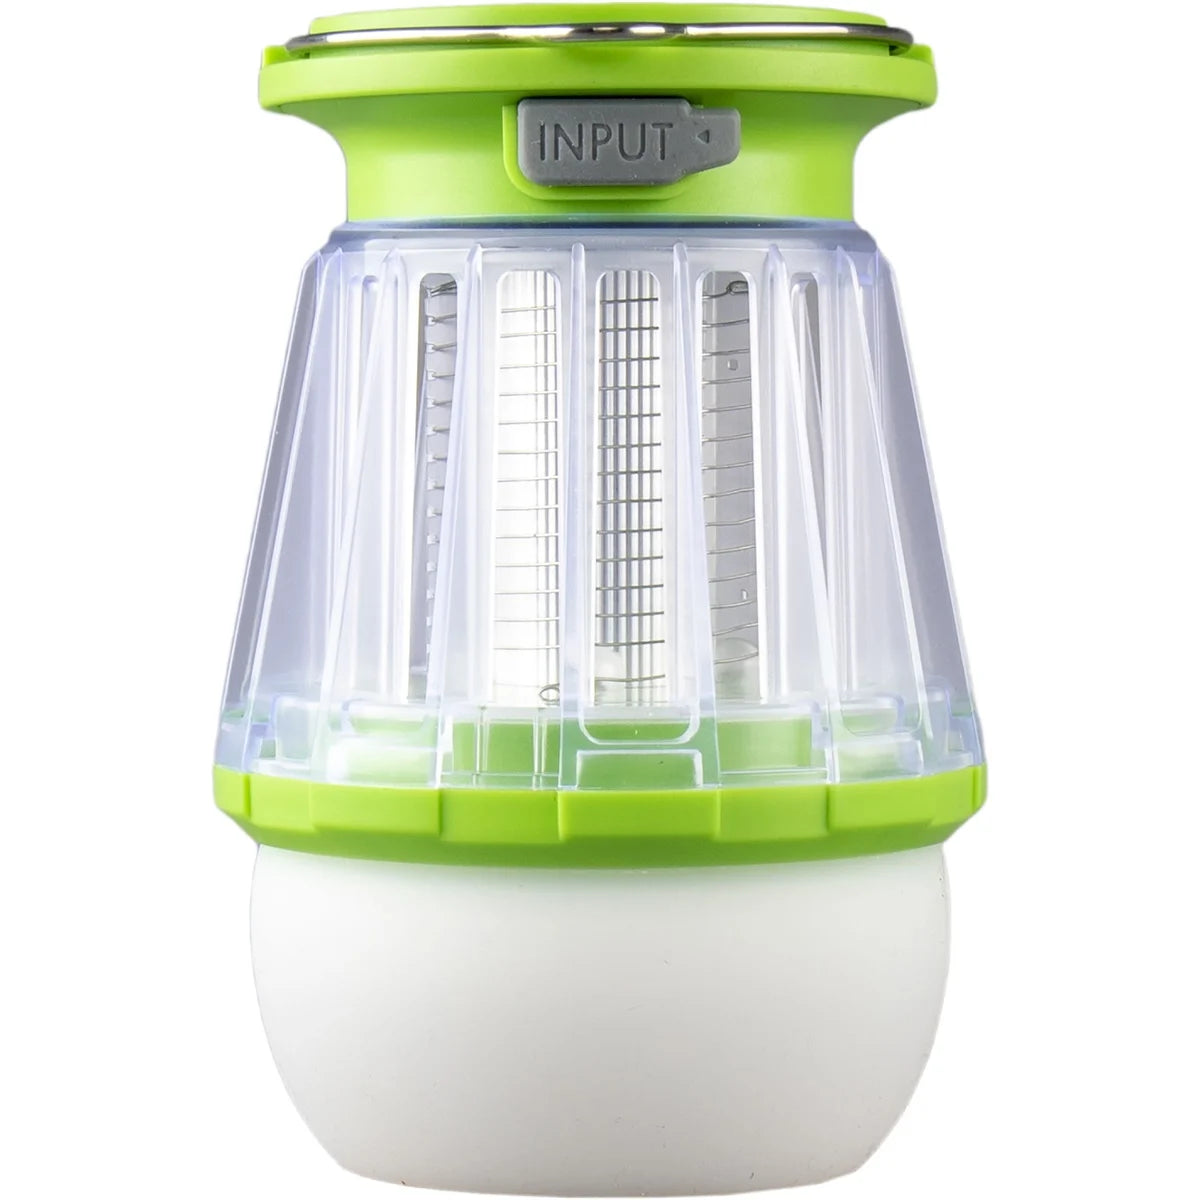 Rubytec Buzz USB Solar Lantern & Mosquito Catcher Green Tentlamp - Reisartikelen-nl